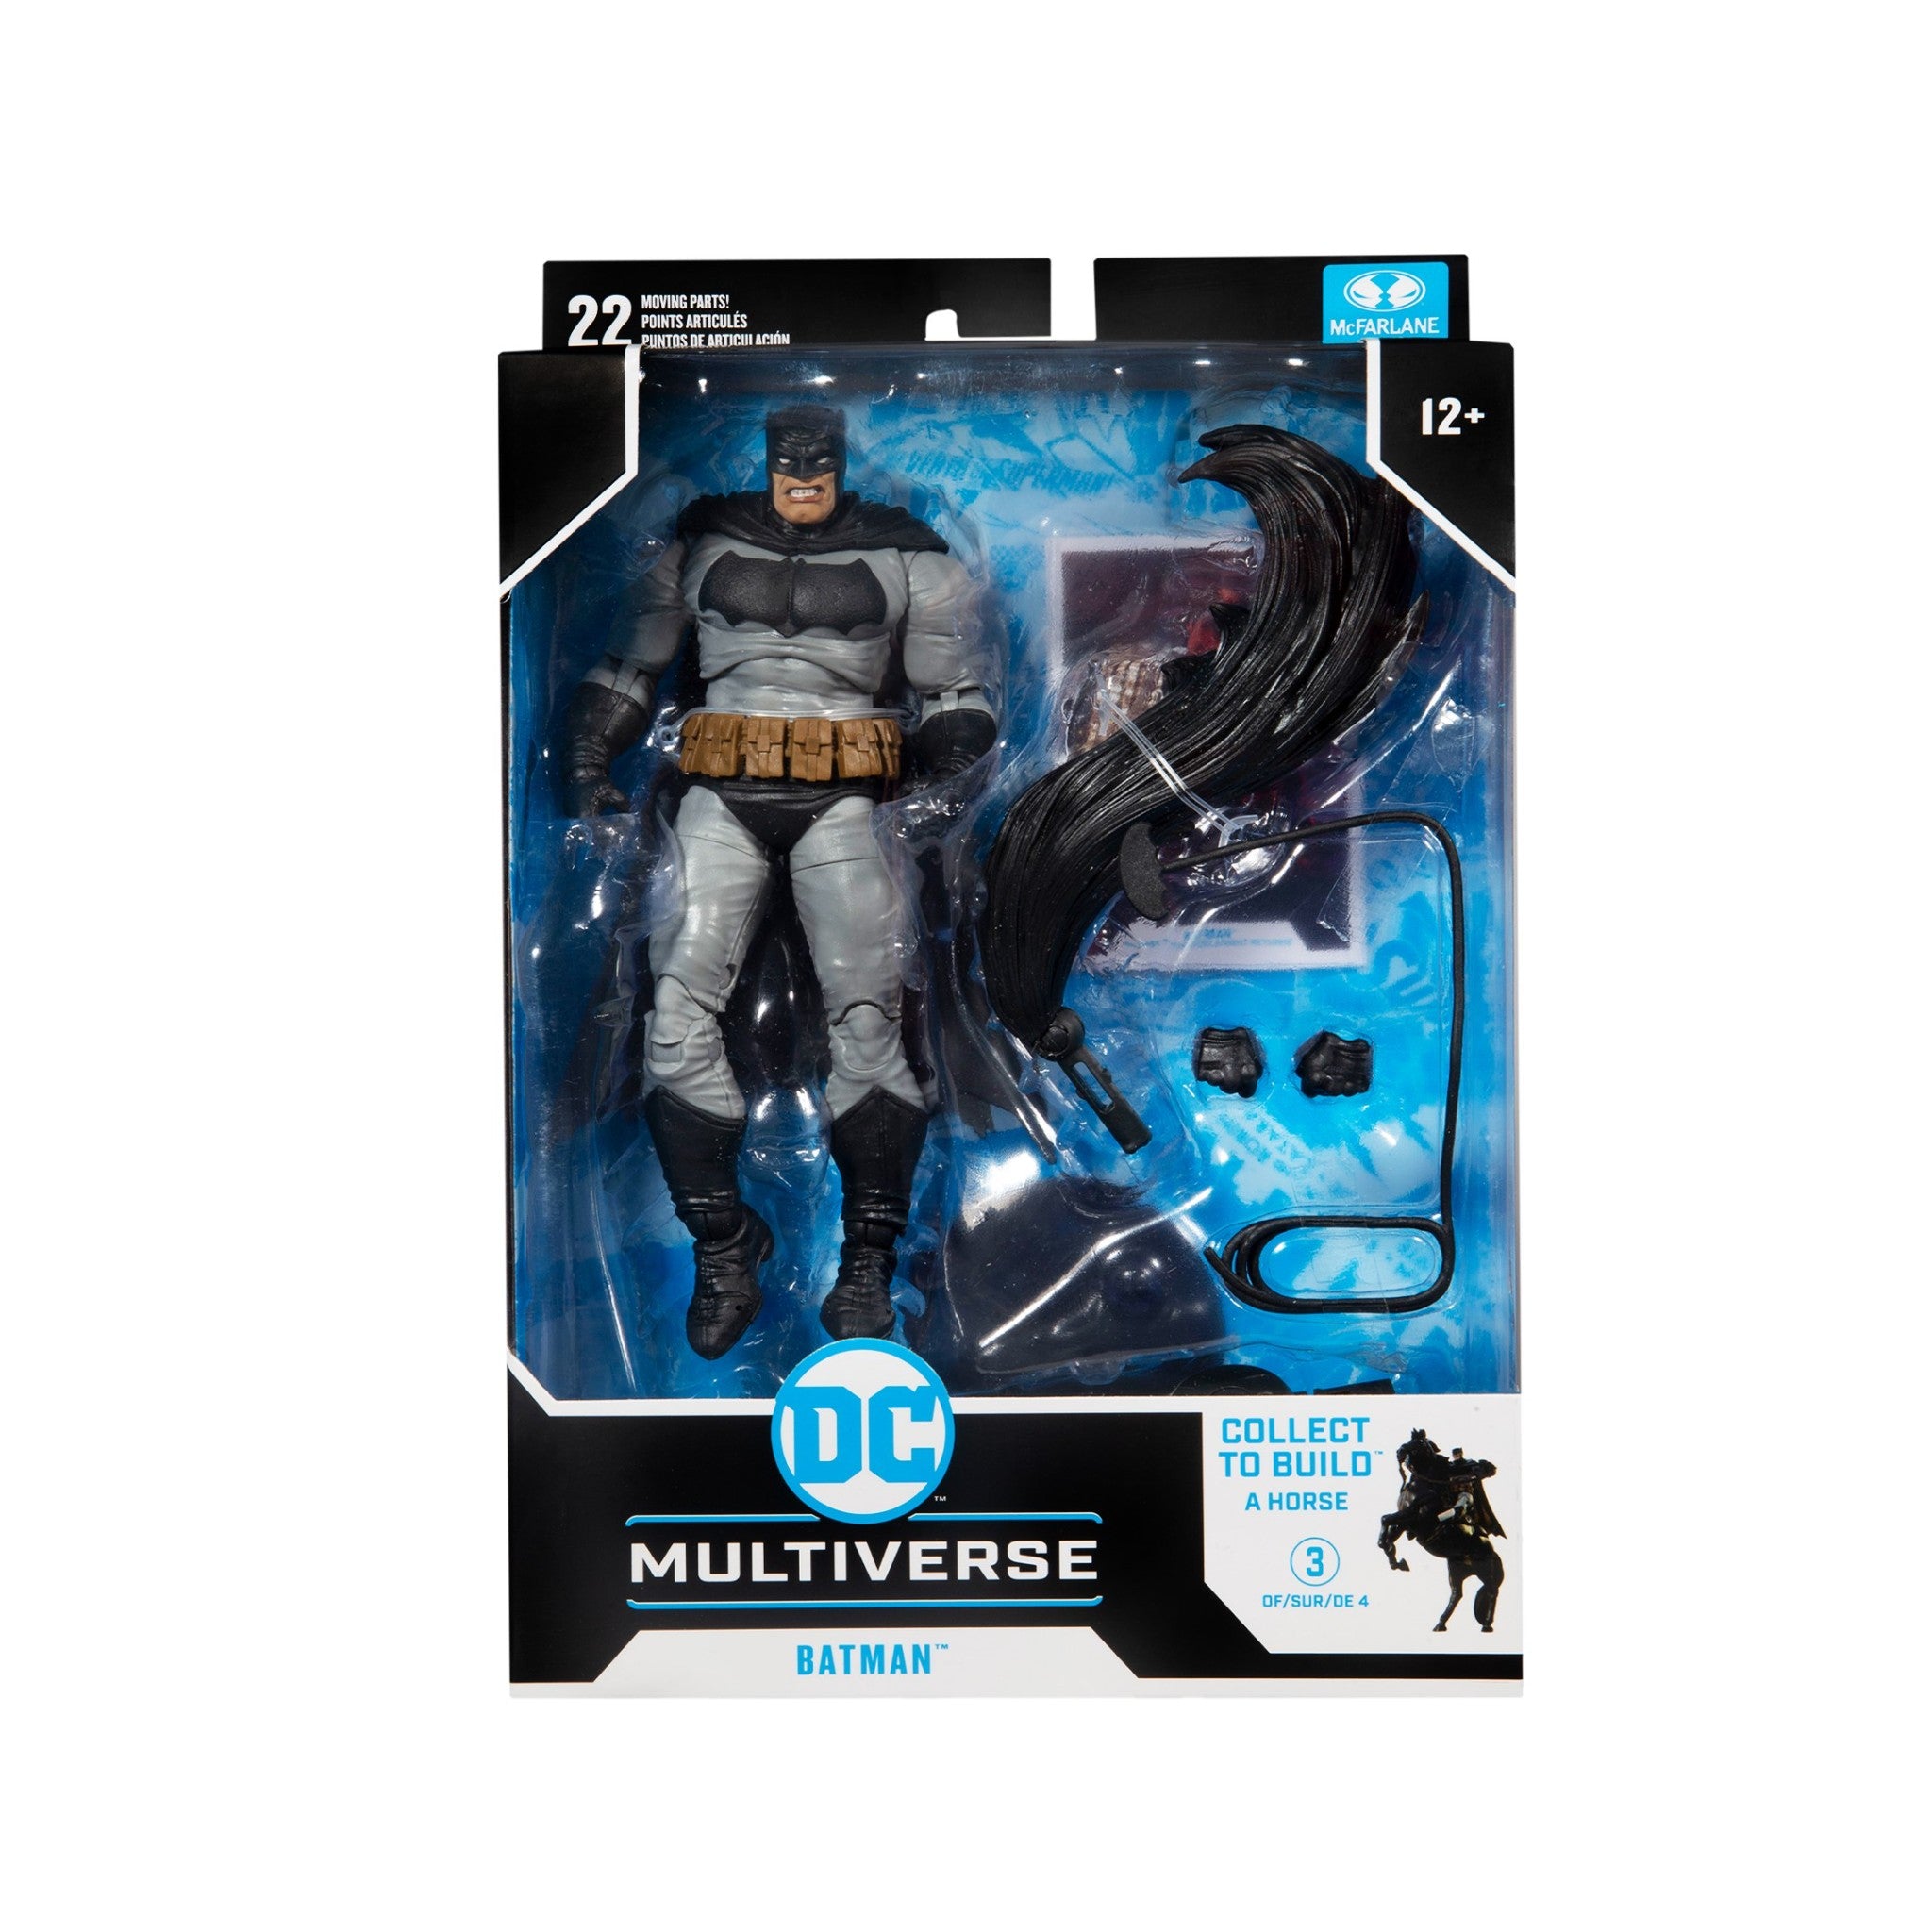 DC Multiverse Batman The Dark Knight Returns Batman BAF Horse - McFarlane Toys